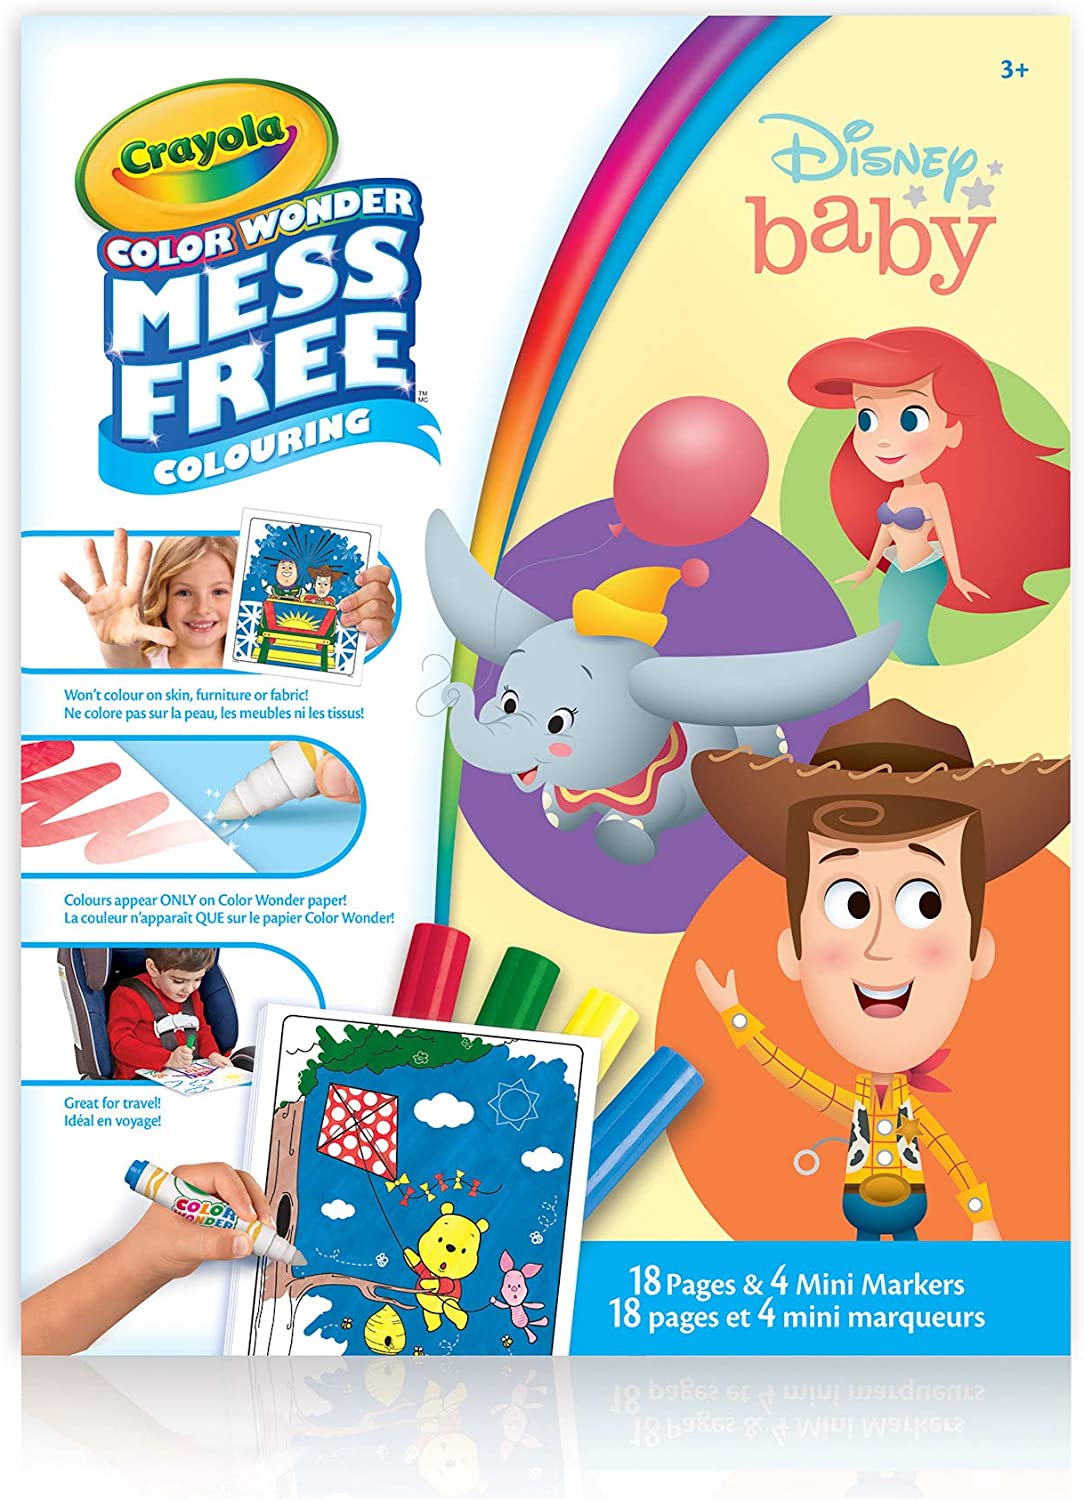 Disney Baby: Colour Wonder Mess Free Colouring Kit | Crayola